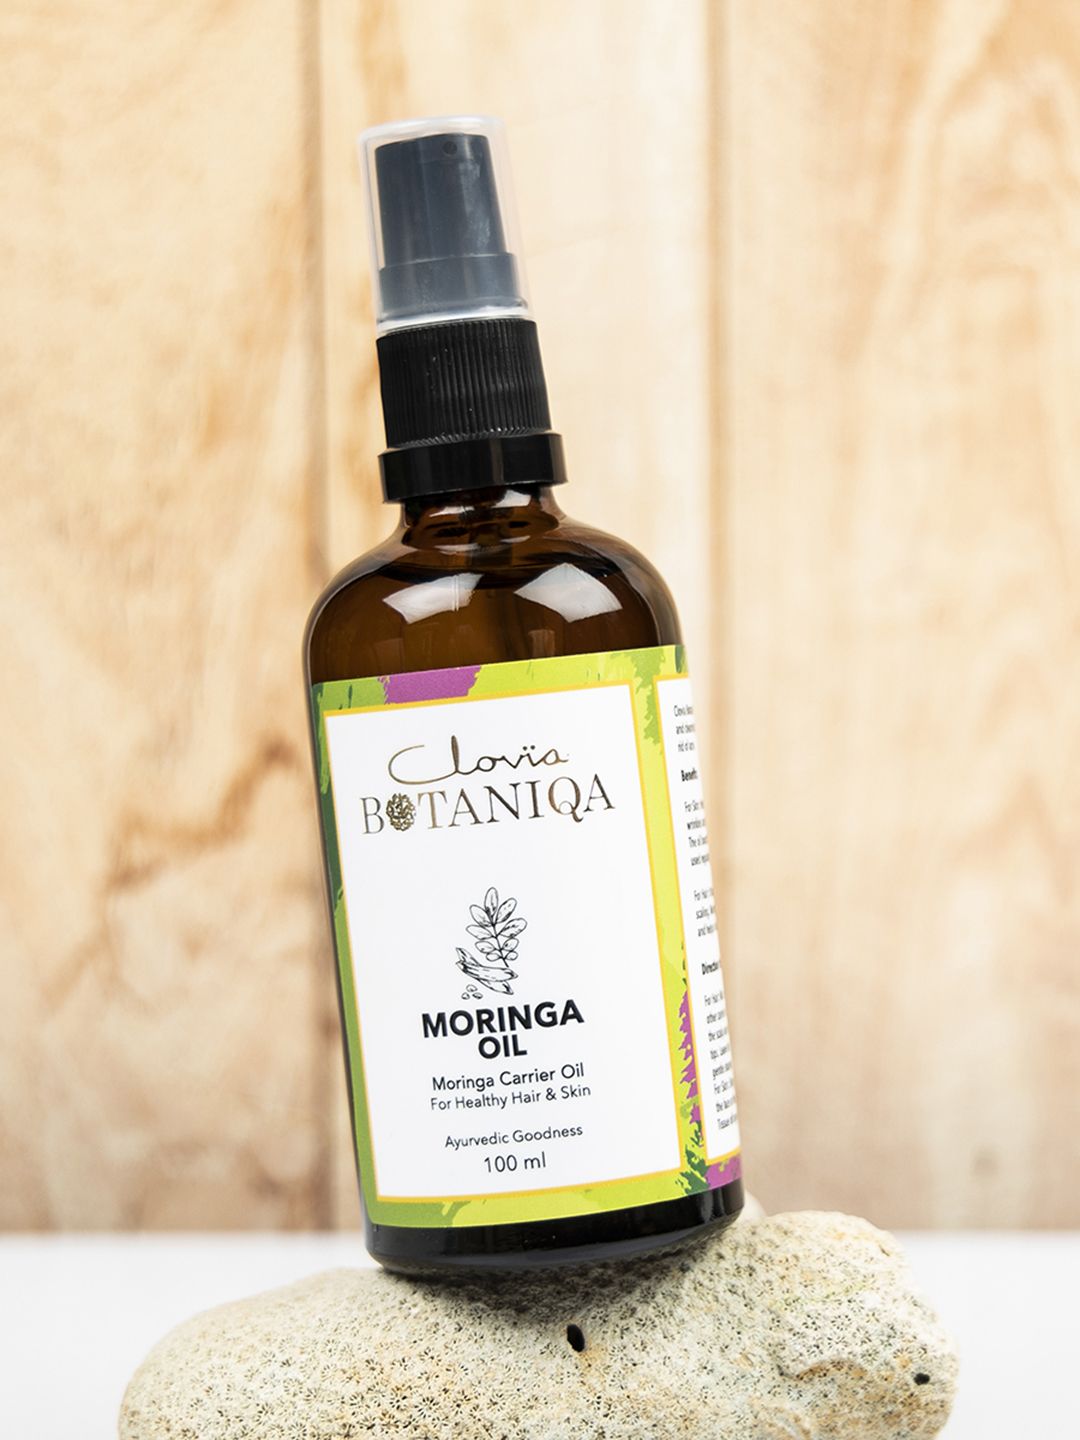 Clovia BOTANIQA Moringa Carrier Oil For Hair & Skin - 100 ml Price in India